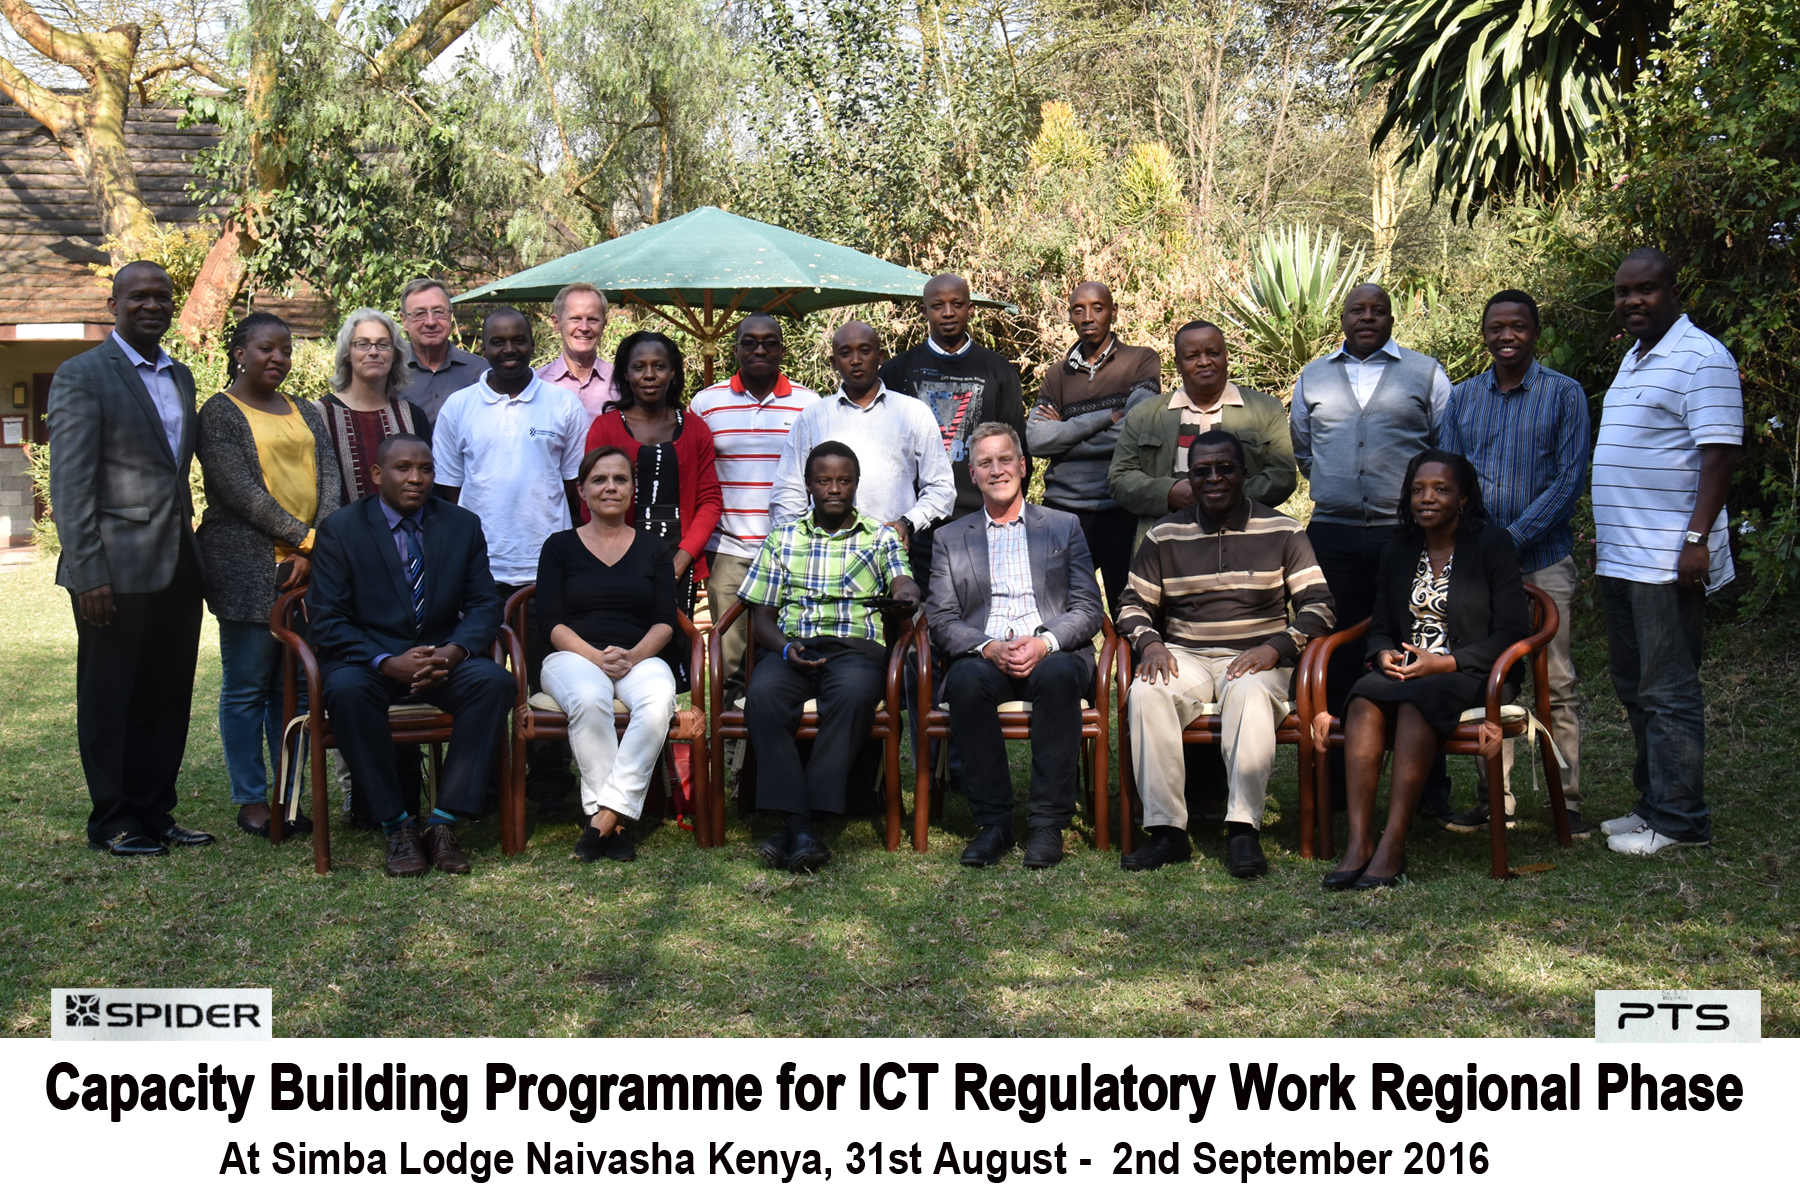 Group picture of pilot programme participants regional phase